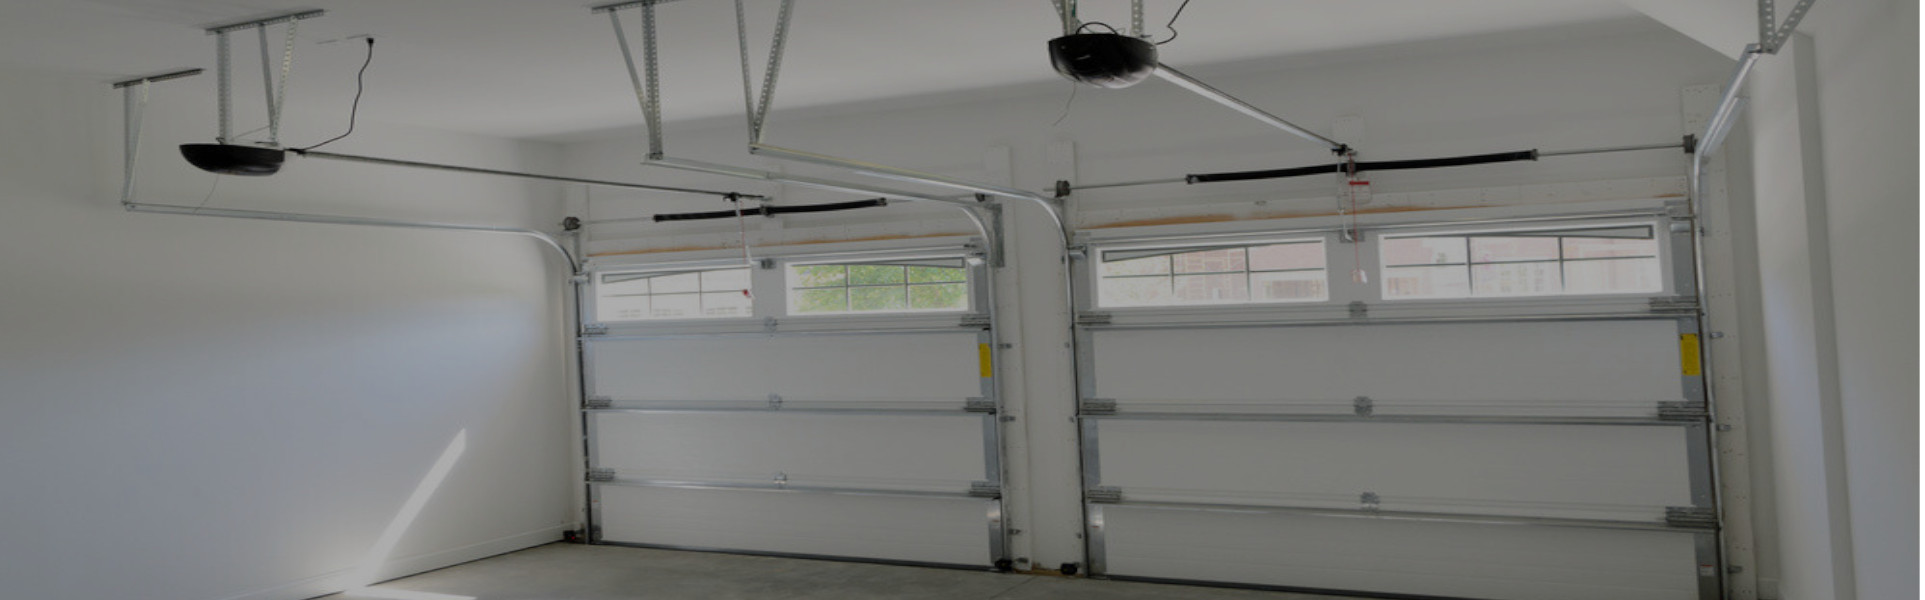 Slider Garage Door Repair, Glaziers in Hornchurch, RM11, RM12